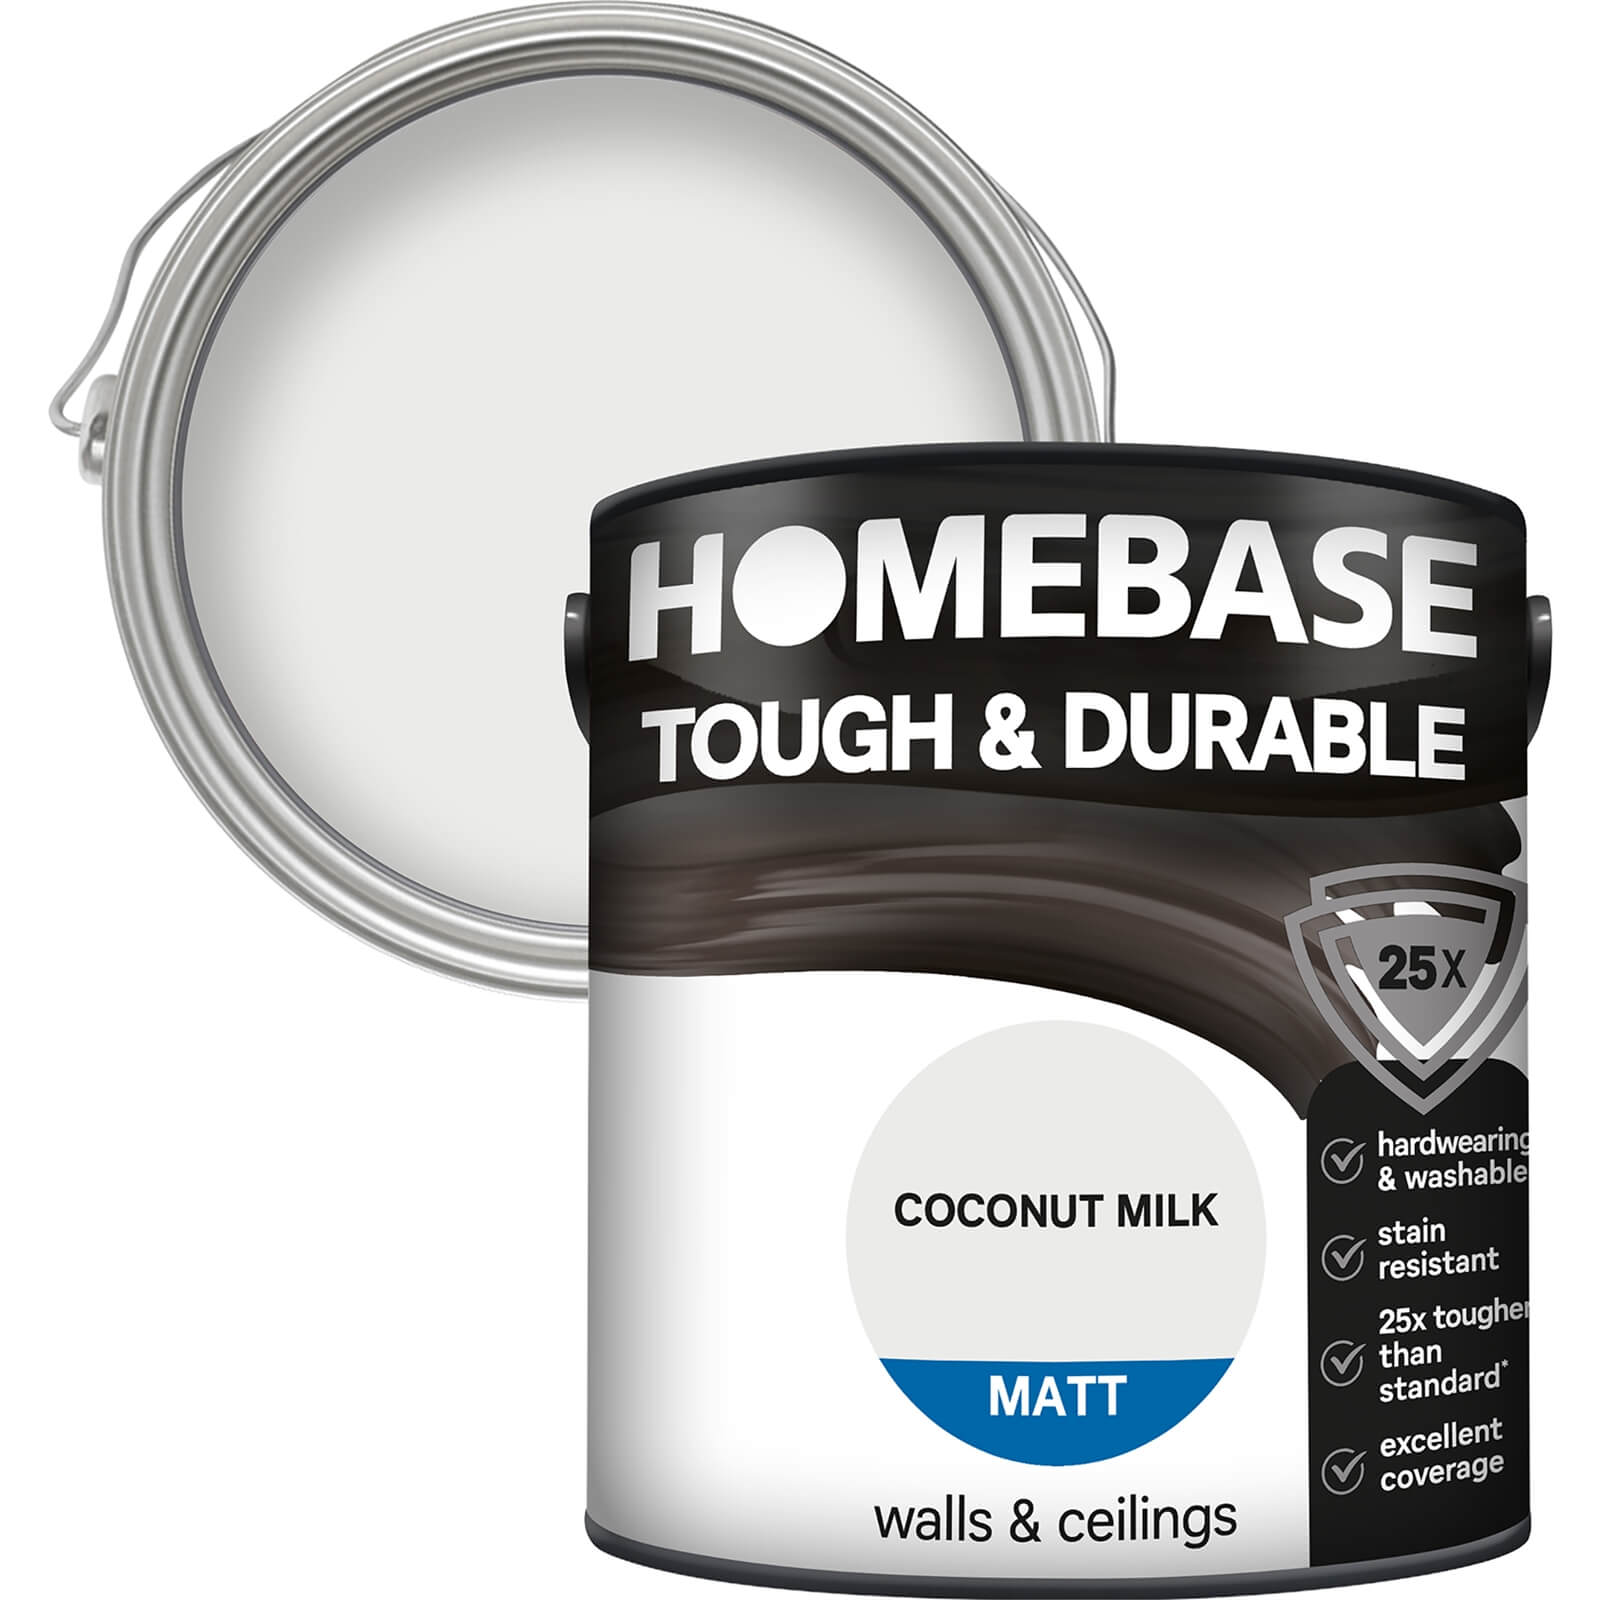 Homebase Tough & Durable Matt Paint Coconut Milk - 2.5L